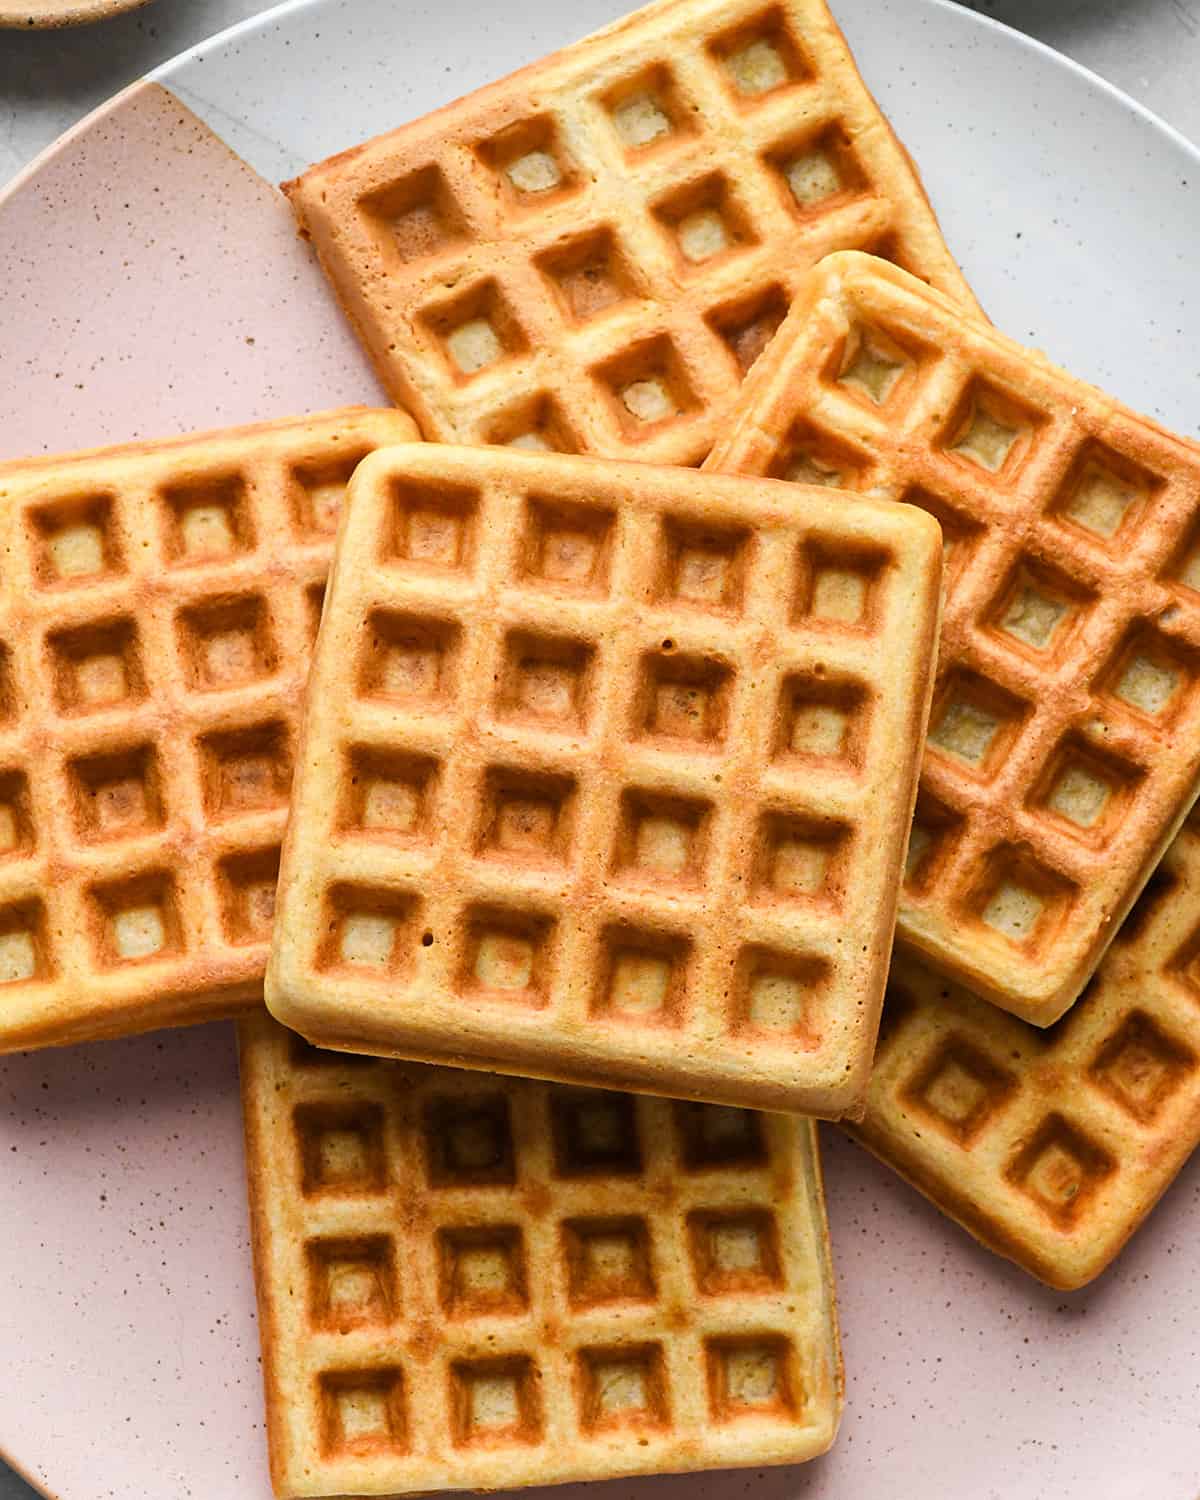 6 homemade waffles on a plate